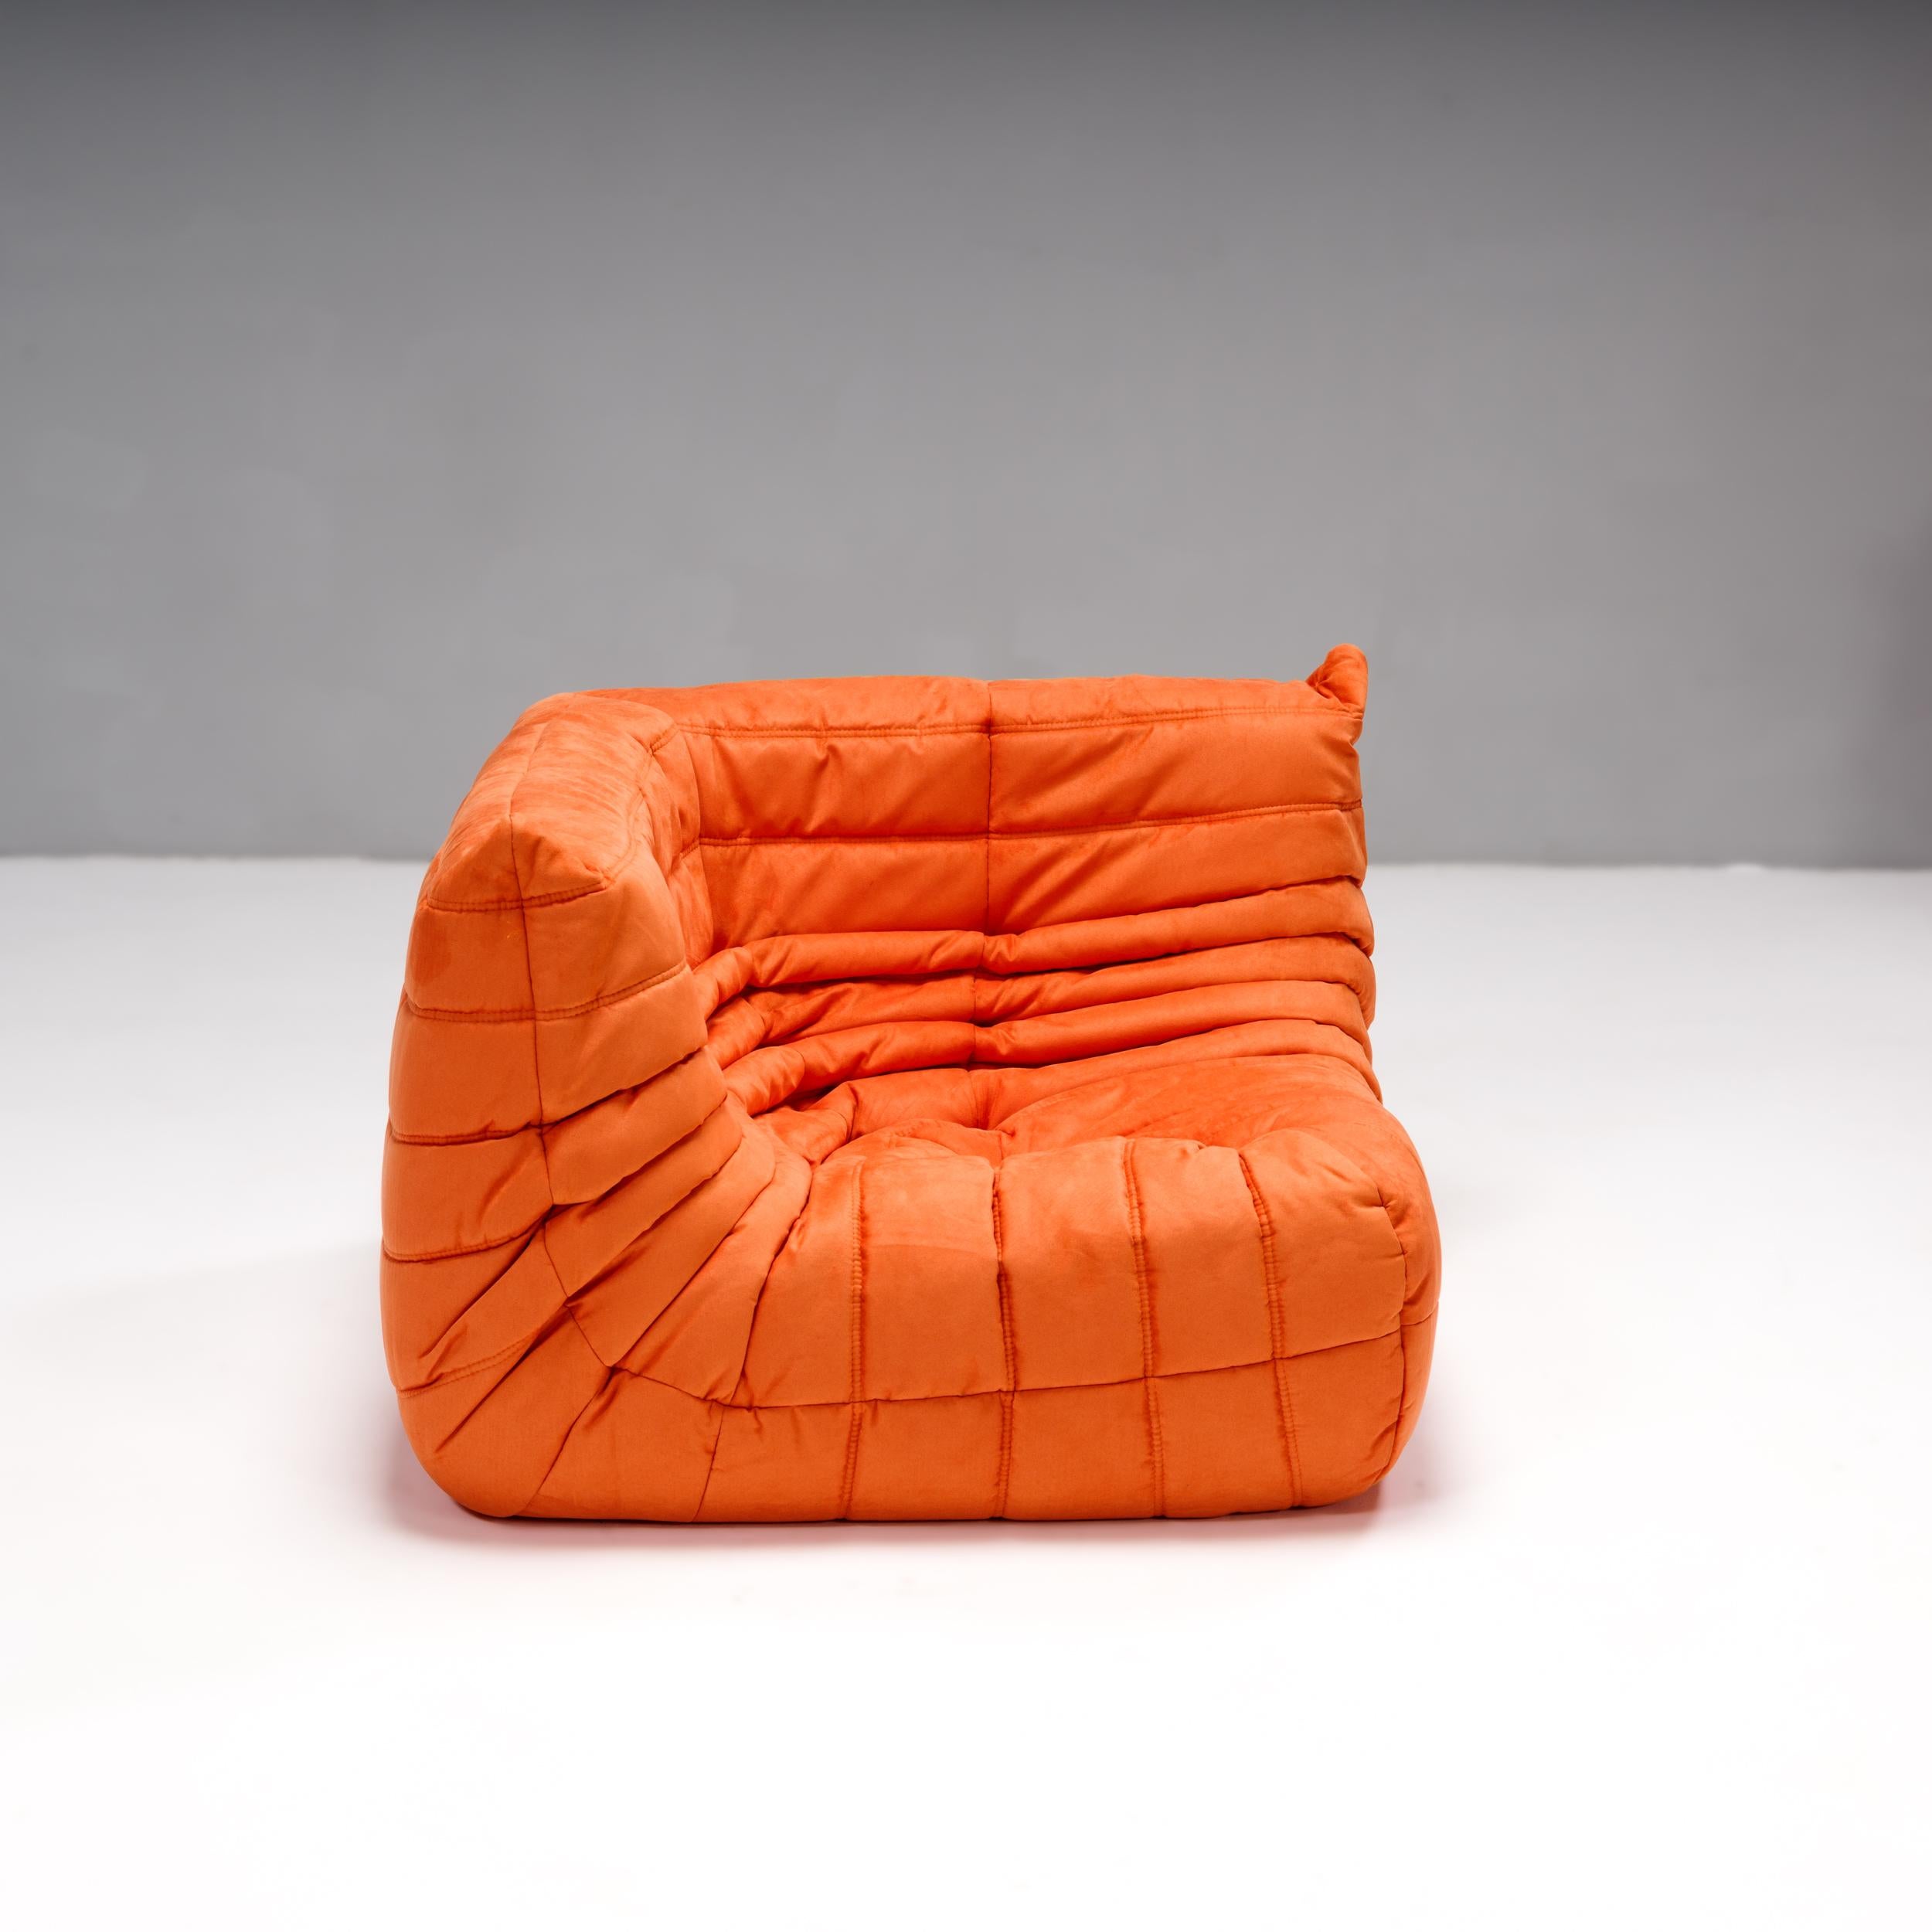 Michel Ducaroy for Ligne Roset Orange Togo Modular Sofas, Set of 5 For Sale 5